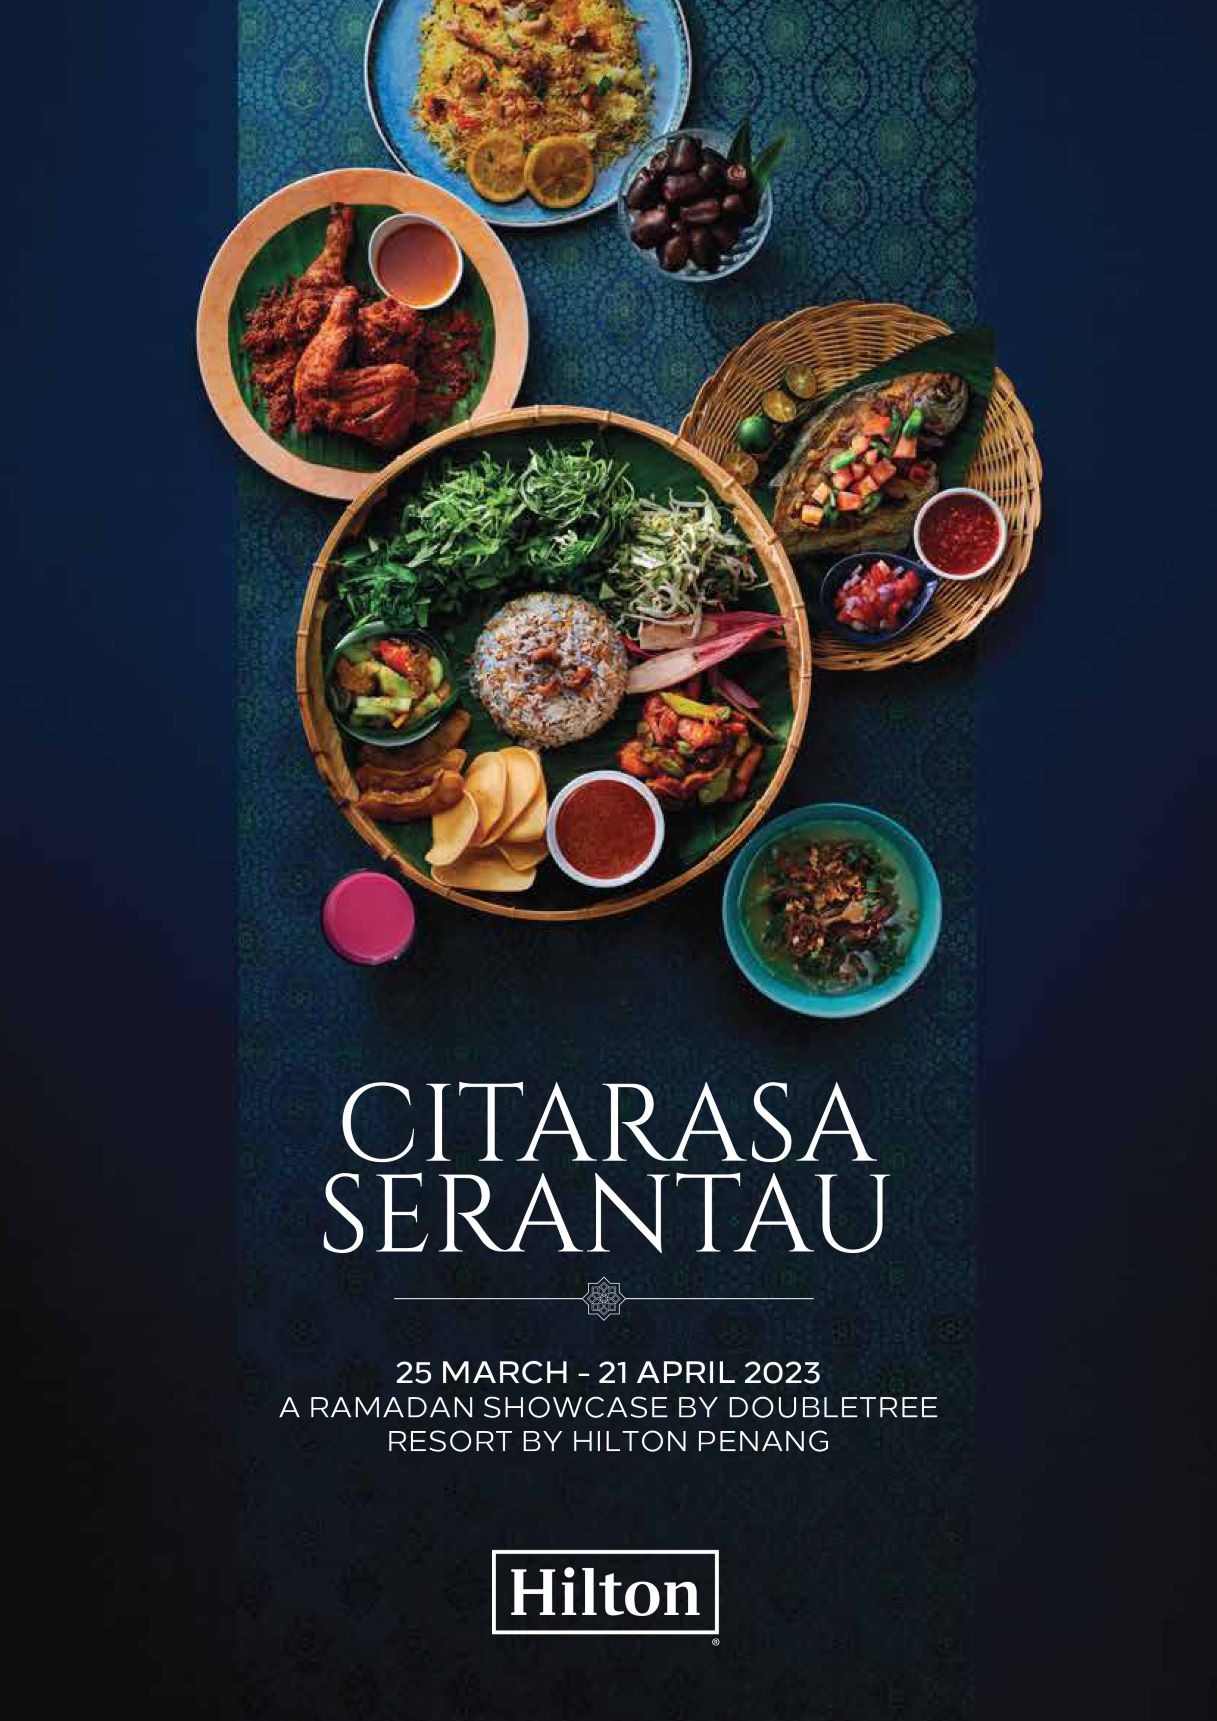 Citarasa Serantau by DoubleTree Resort